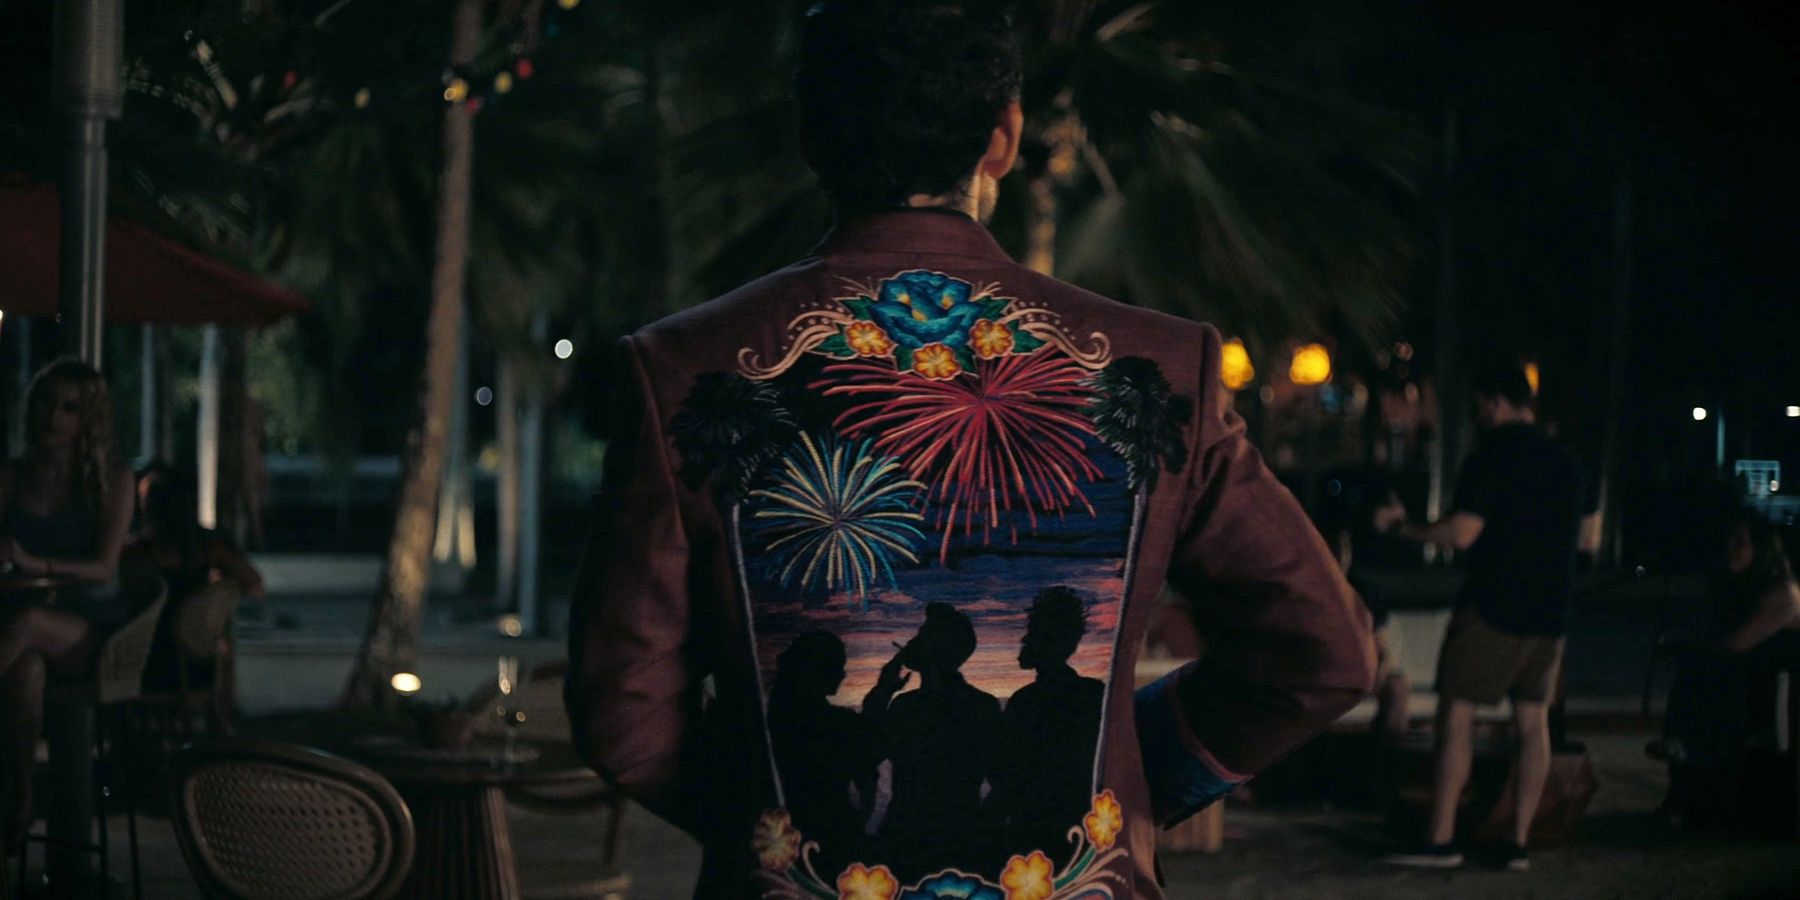 Baltasar Frias' jacket depicts Alex, Luna and Baltasar in The Resort finale